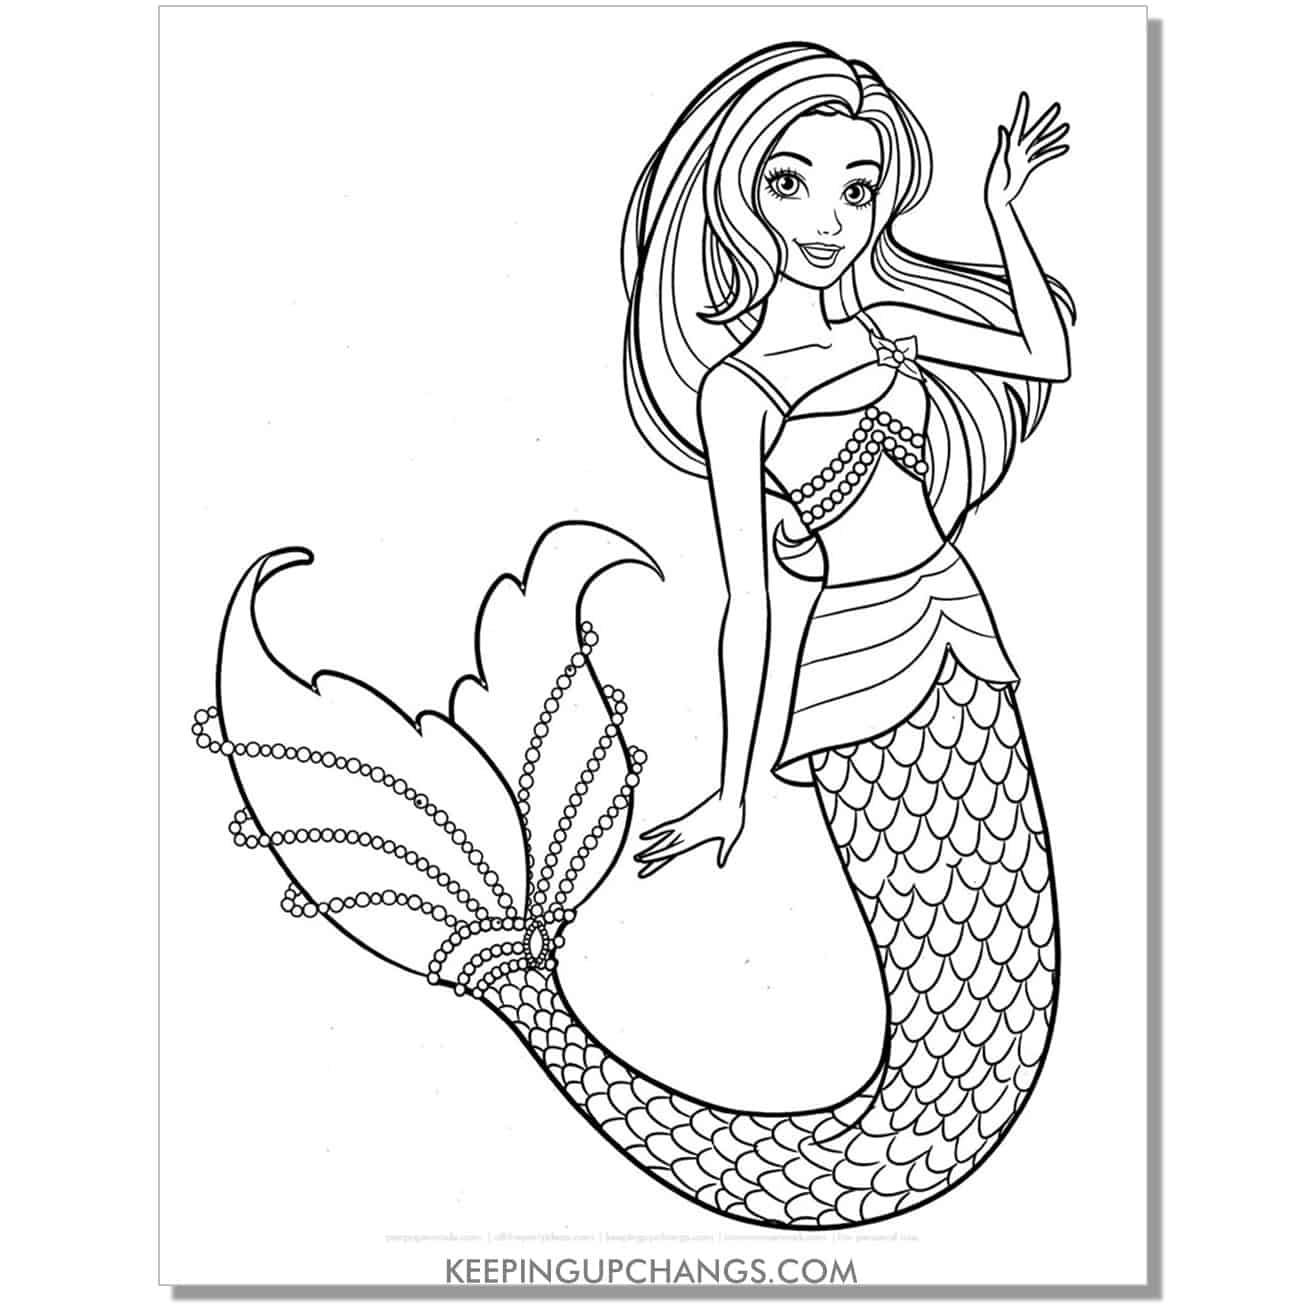 barbie mermaid with hair down coloring page.